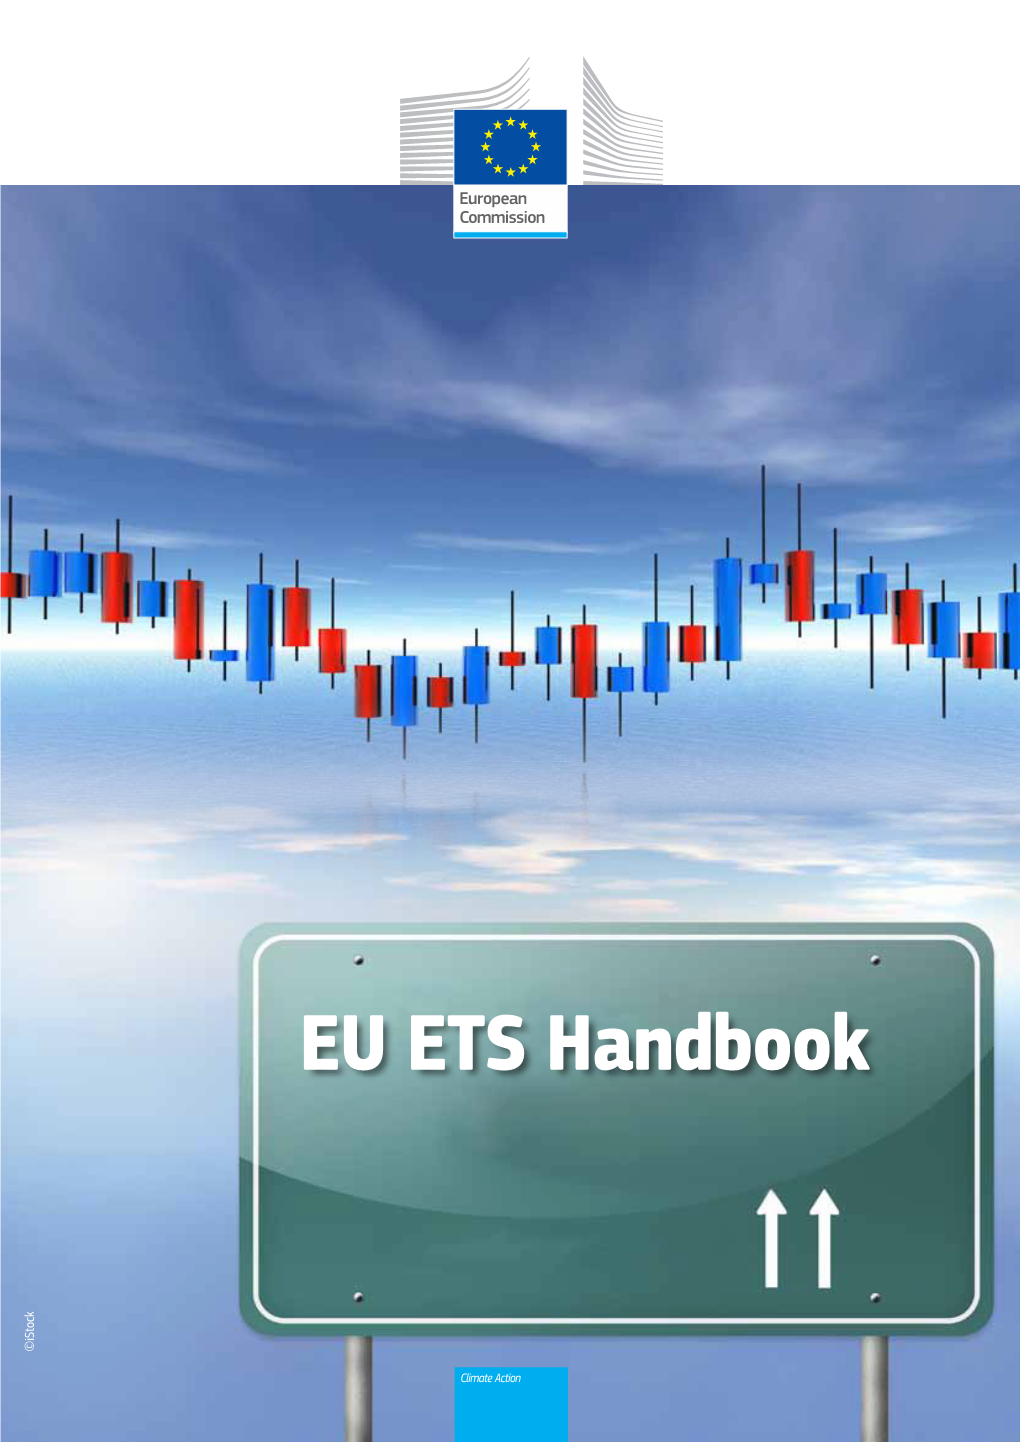 EU ETS Handbook ©Istock